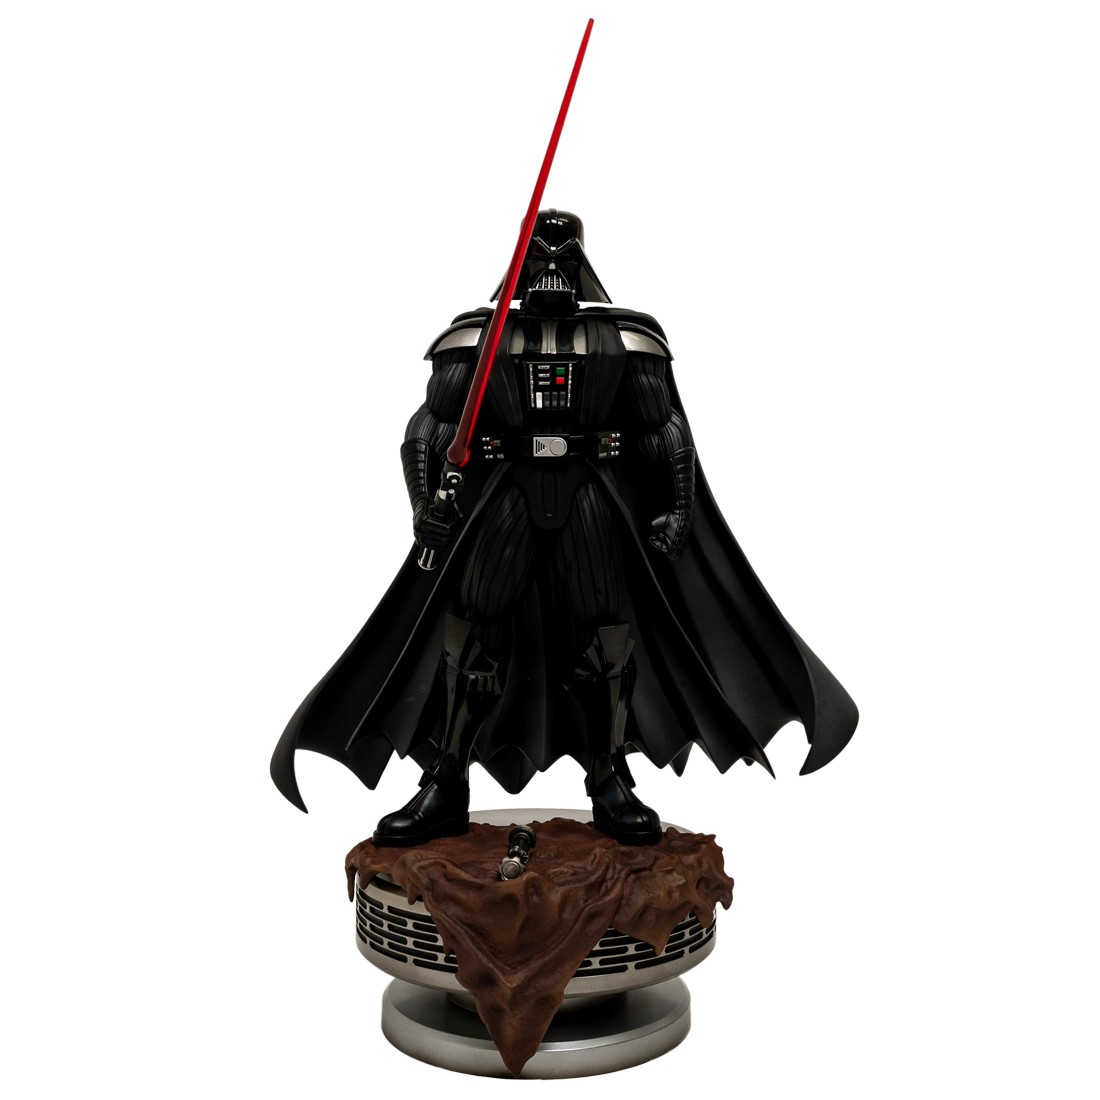 Kotobukiya ARTFX Artist Series Star Wars A New Hope Darth Vader The Ultimate Evil Statue (black)